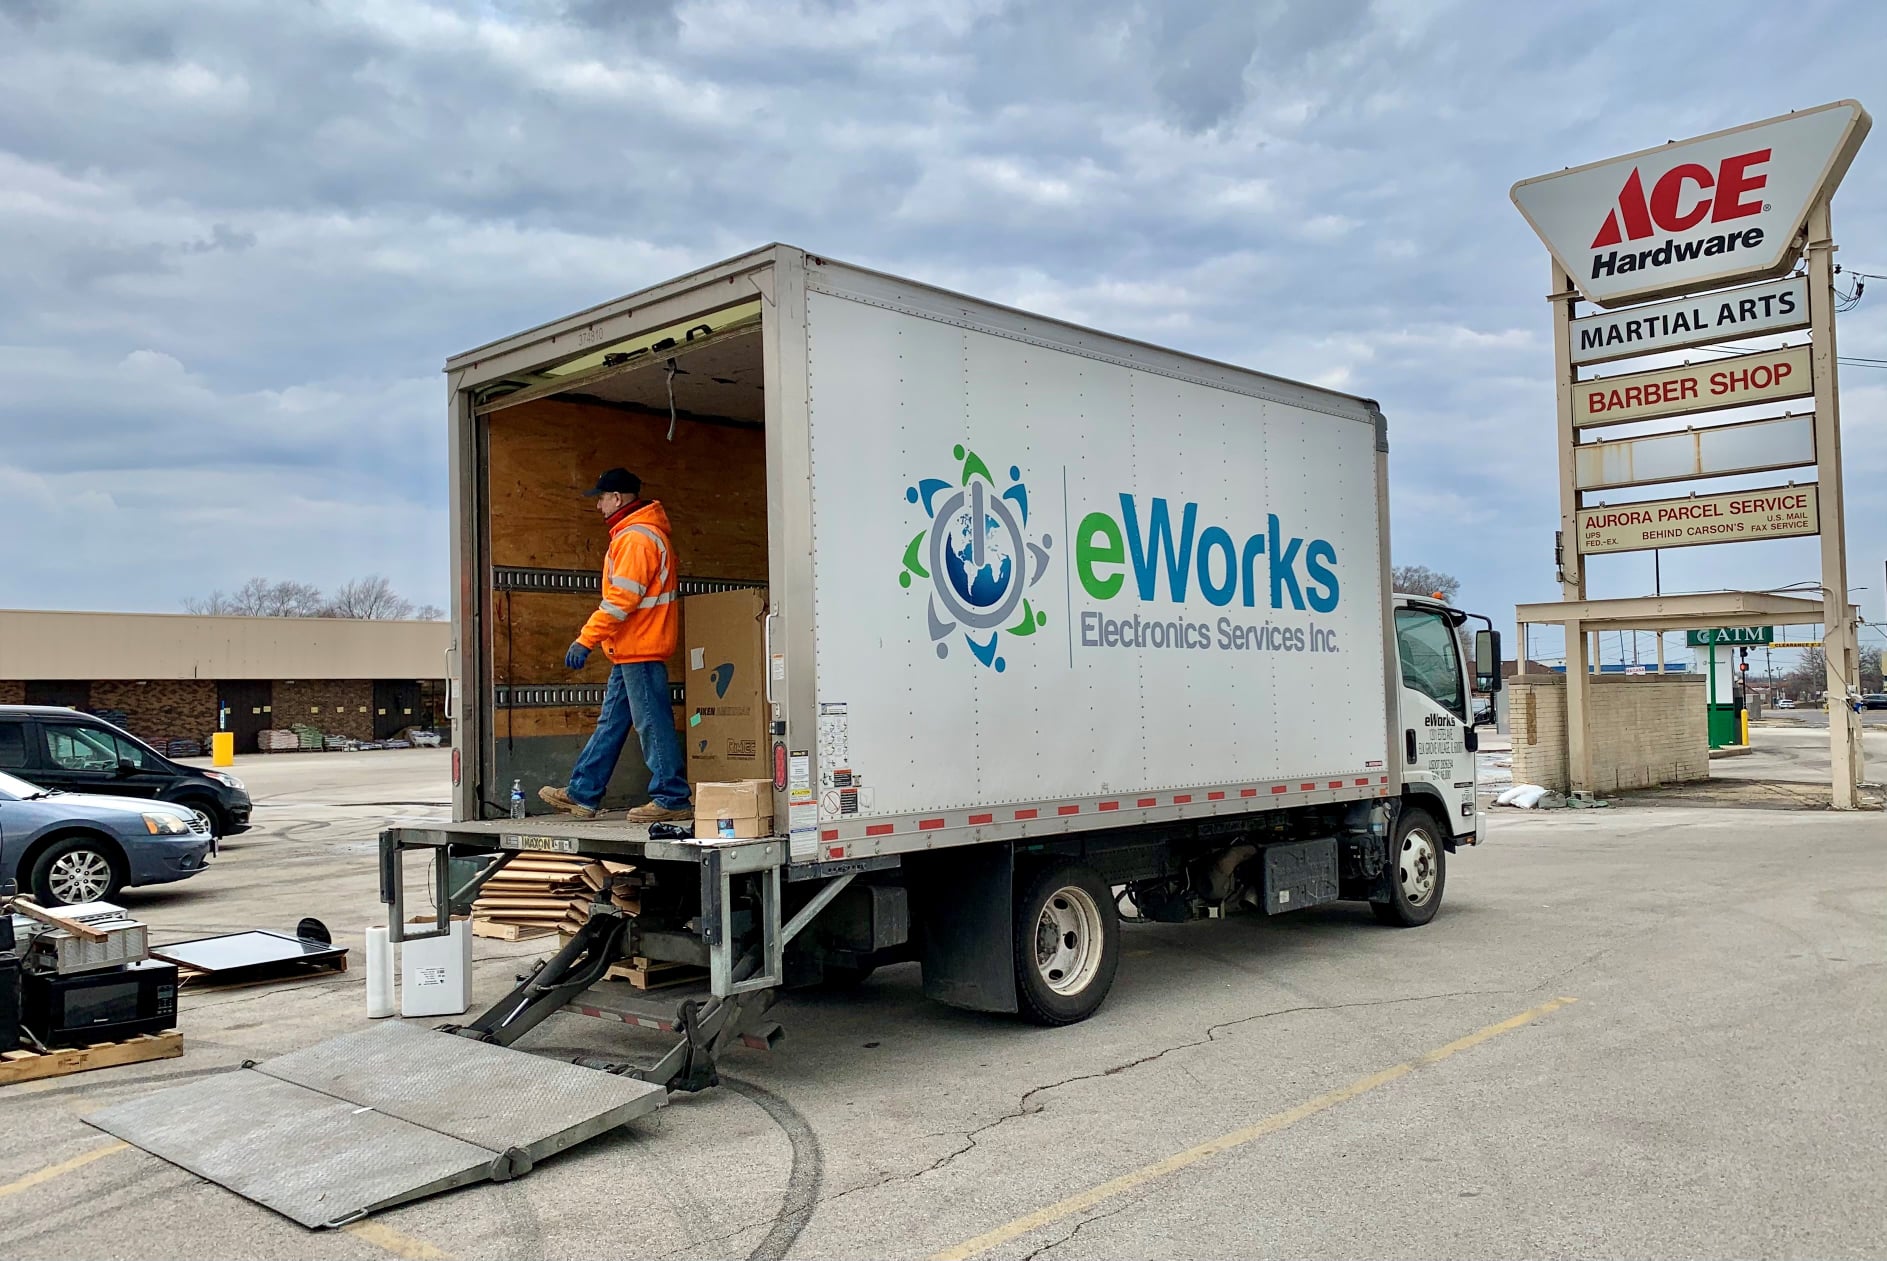 eWorks box truck near Ace Hardware sign